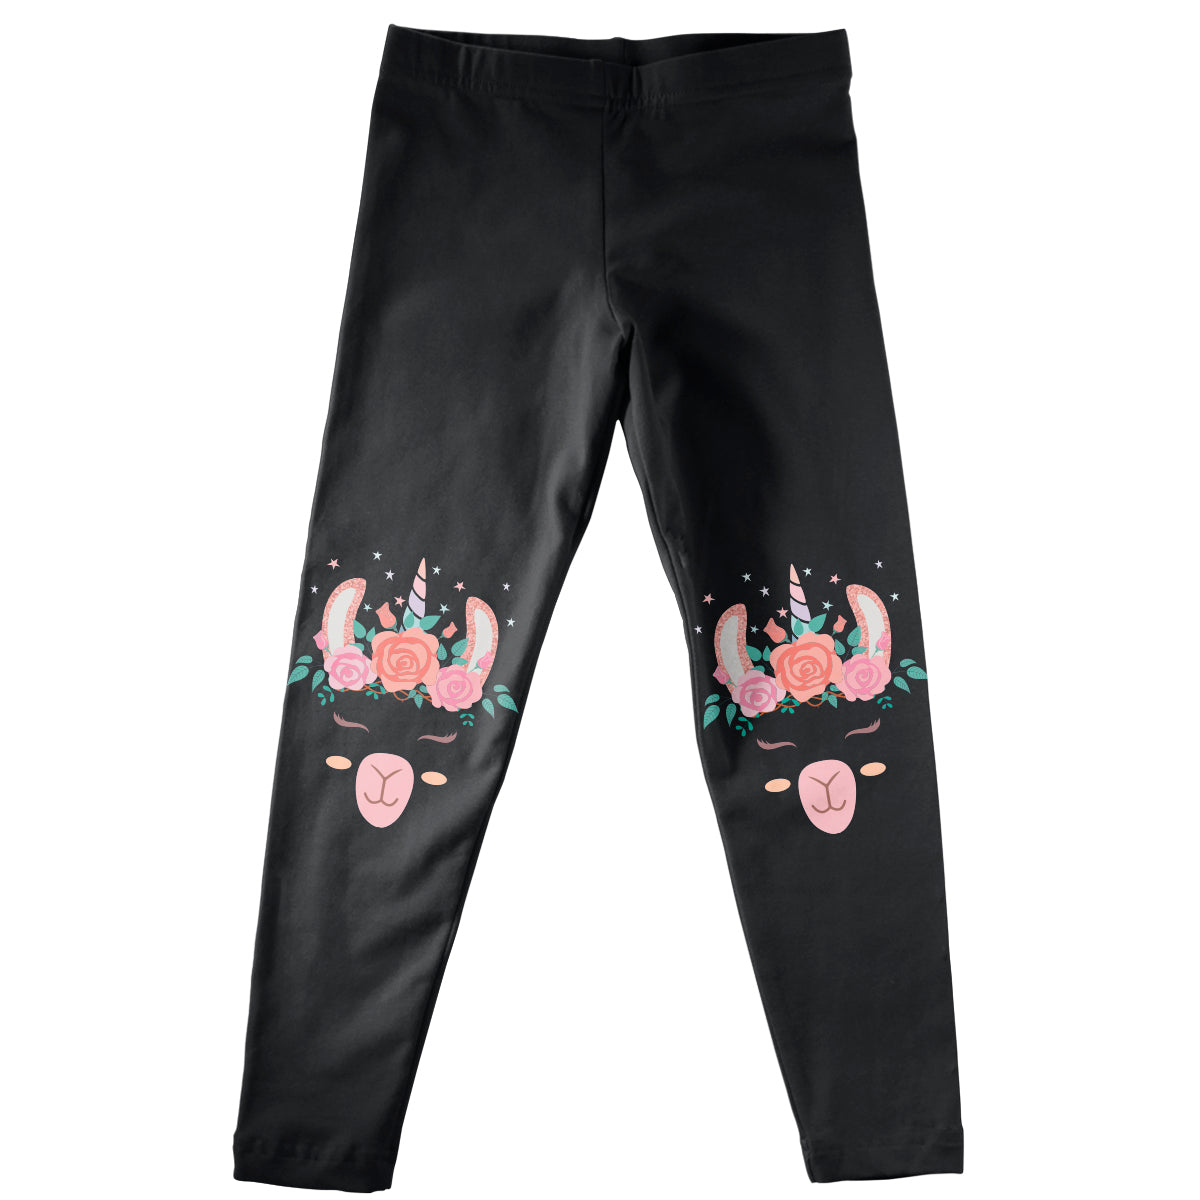 Black and floral llamacorn girls leggings - Wimziy&Co.